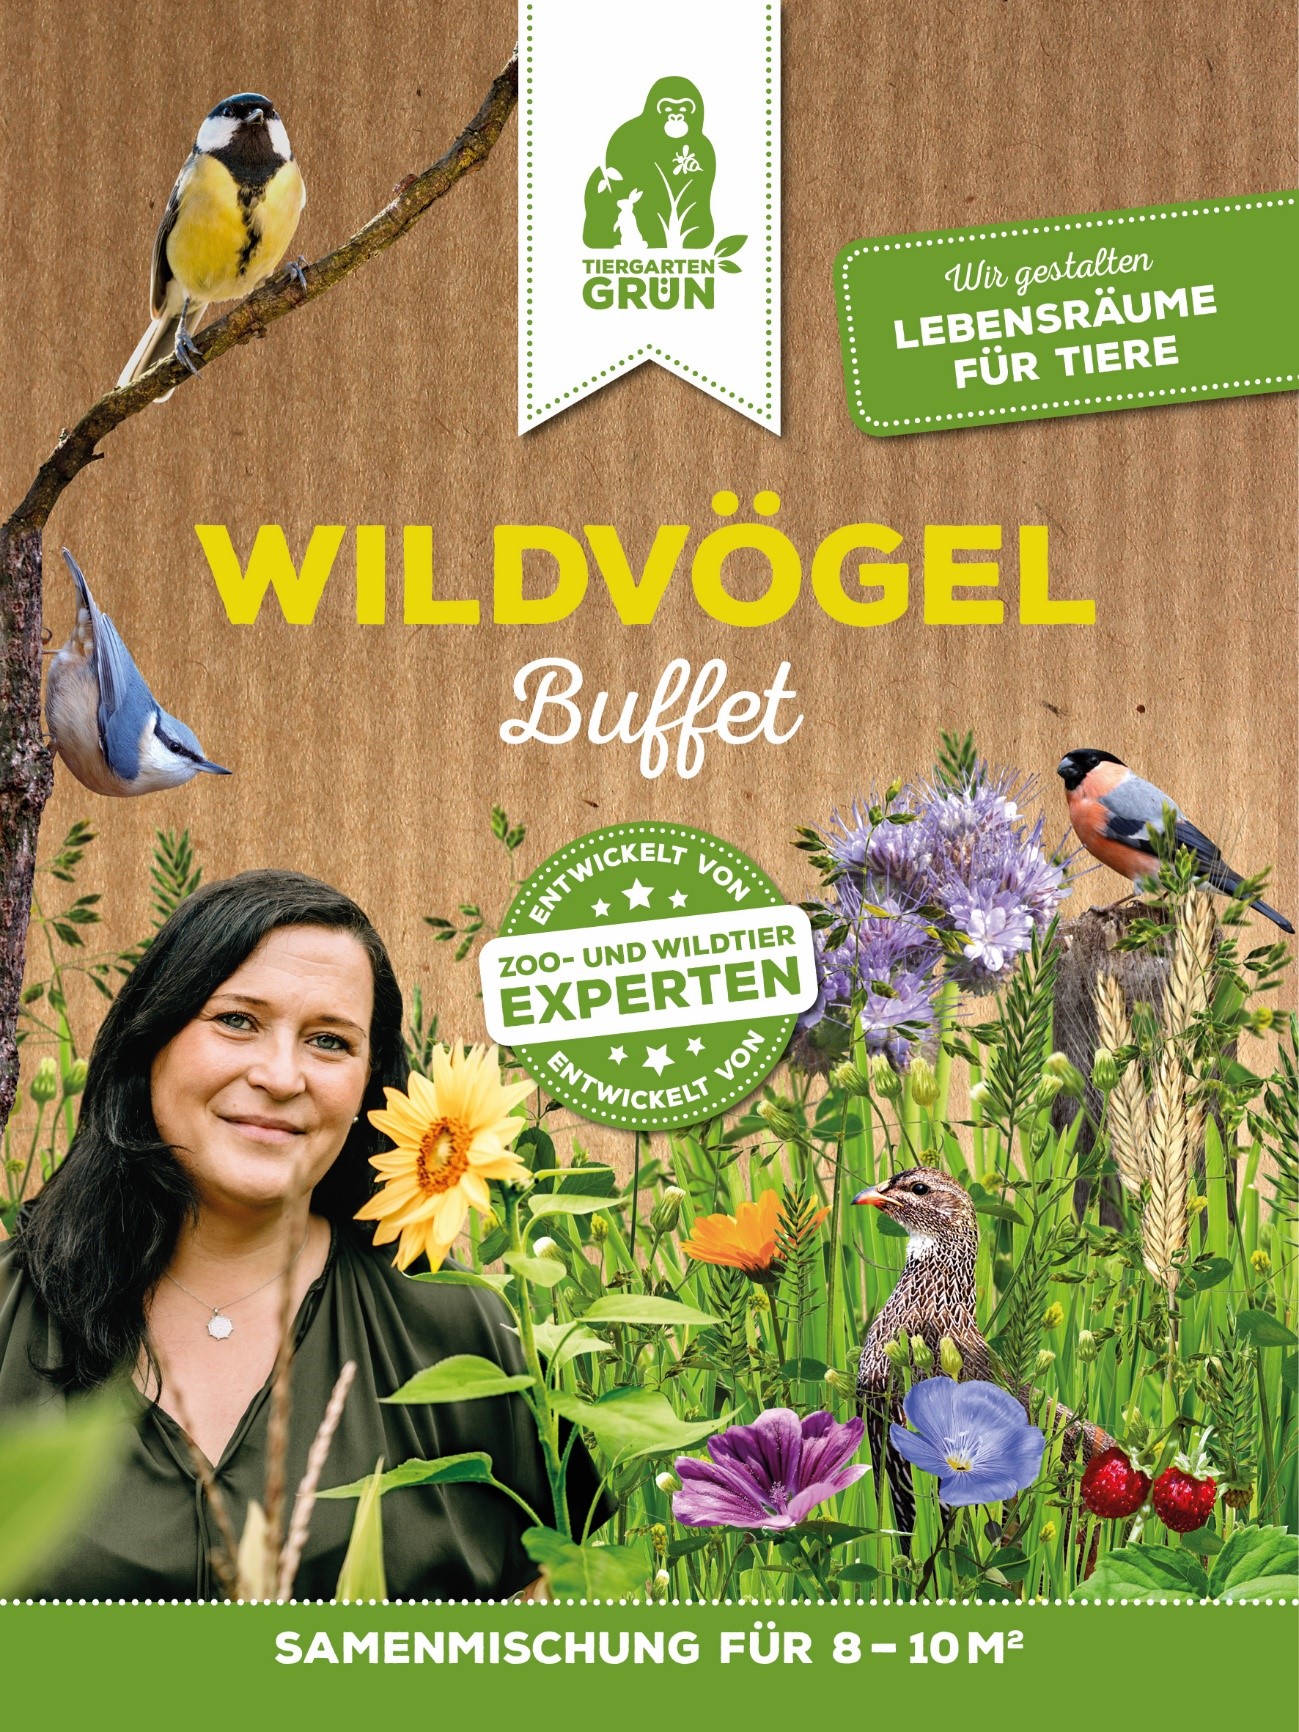 Tiergartengrün "Wildvogel Buffet"